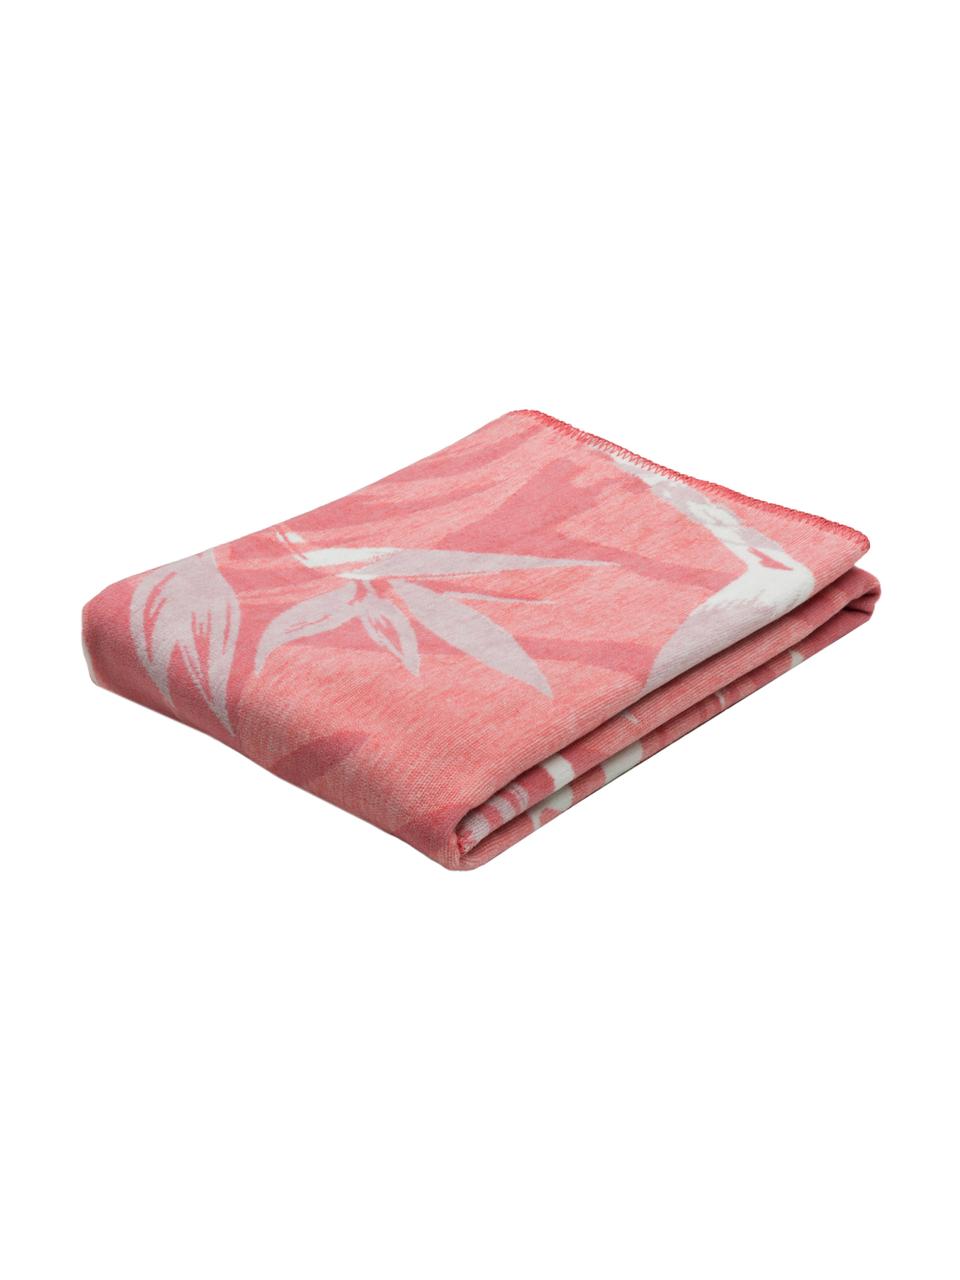 Plaid reversibile Tropical, 65% cotone, 35% poliacrilico, Toni rosa, bianco, Larg. 150 x Lung. 200 cm